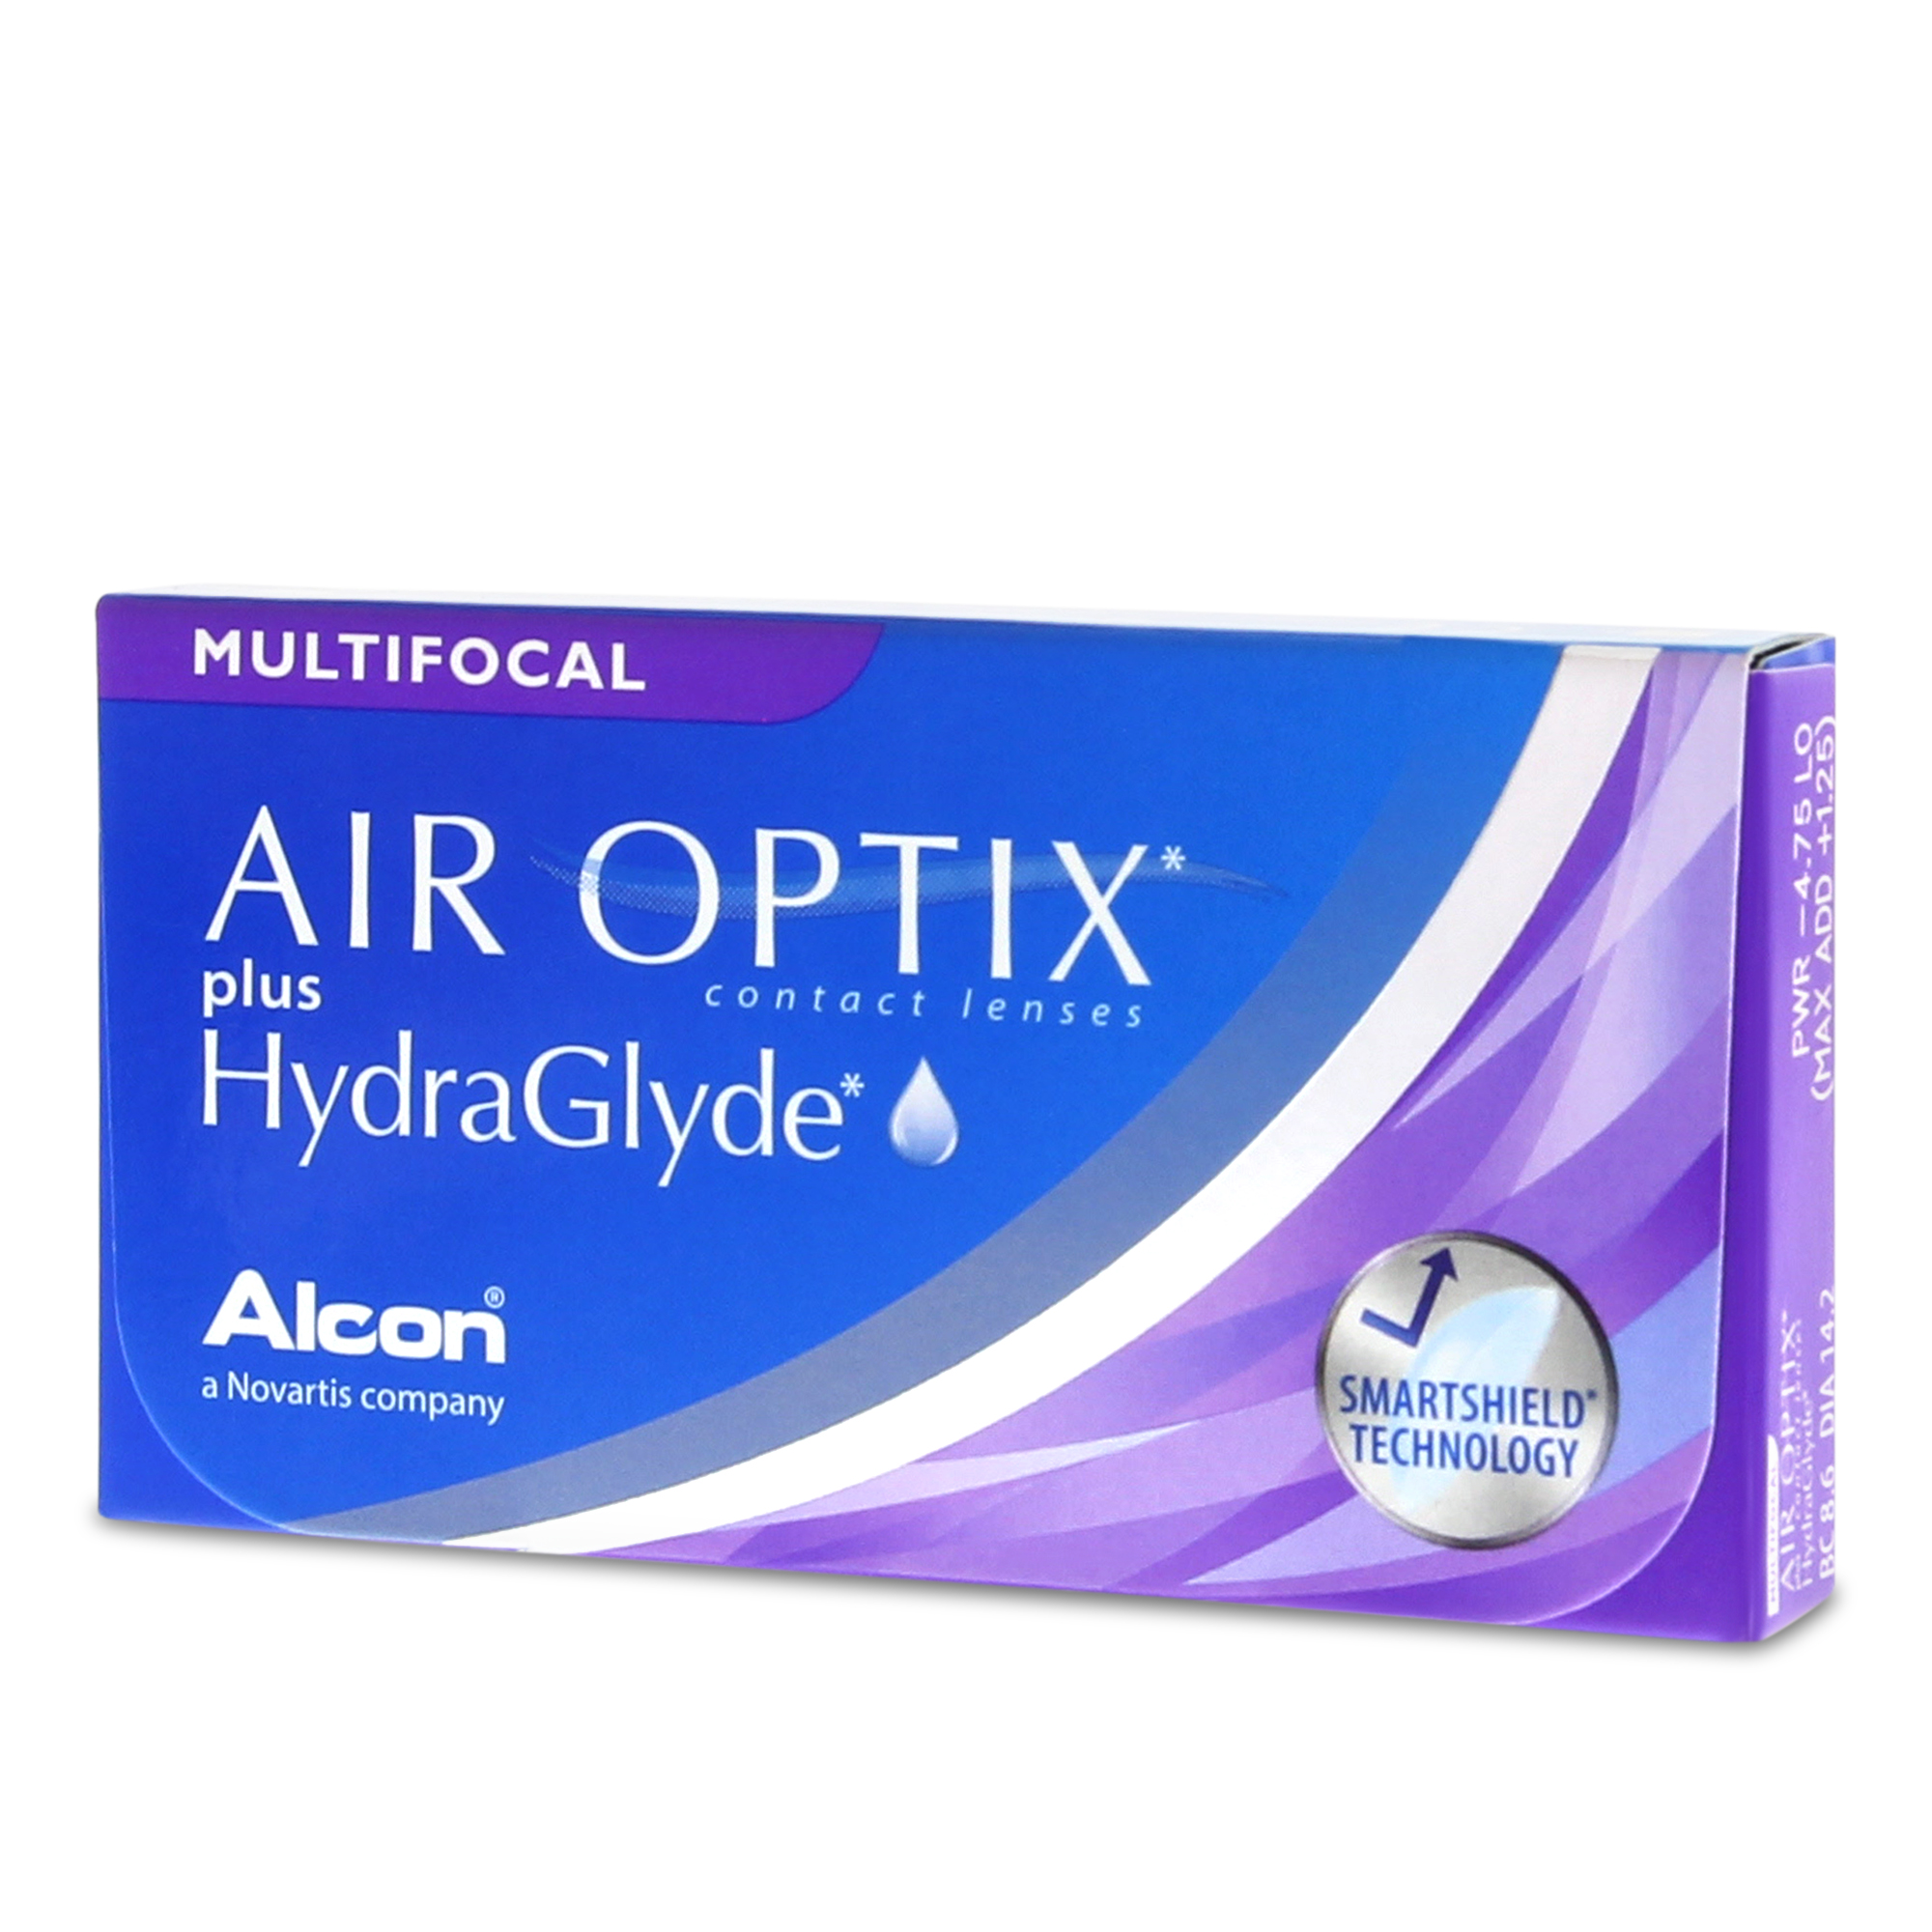 Air optix plus hydra glide hydra 24 creme glacee крем payot